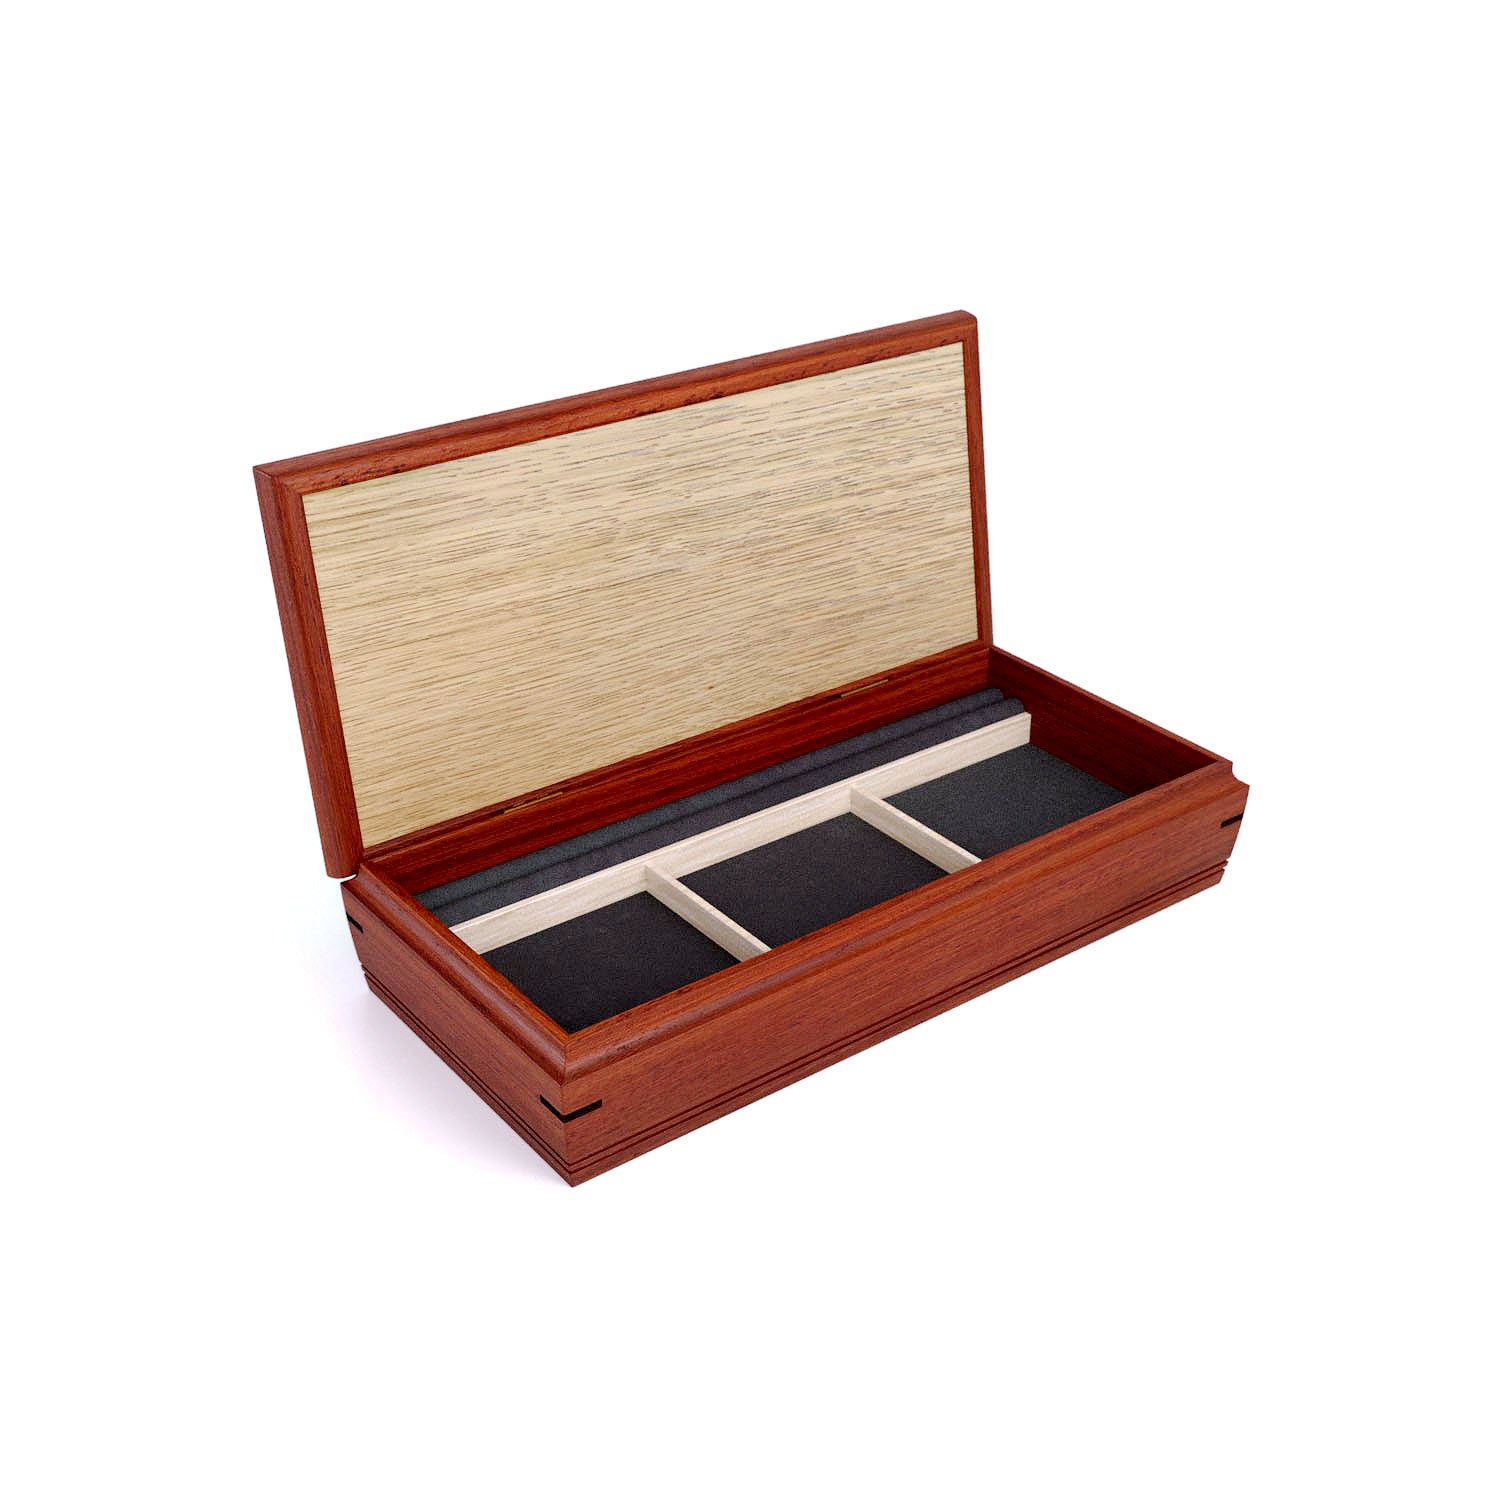 Mikutowski handcrafted wood small jewelry box - Terrestra